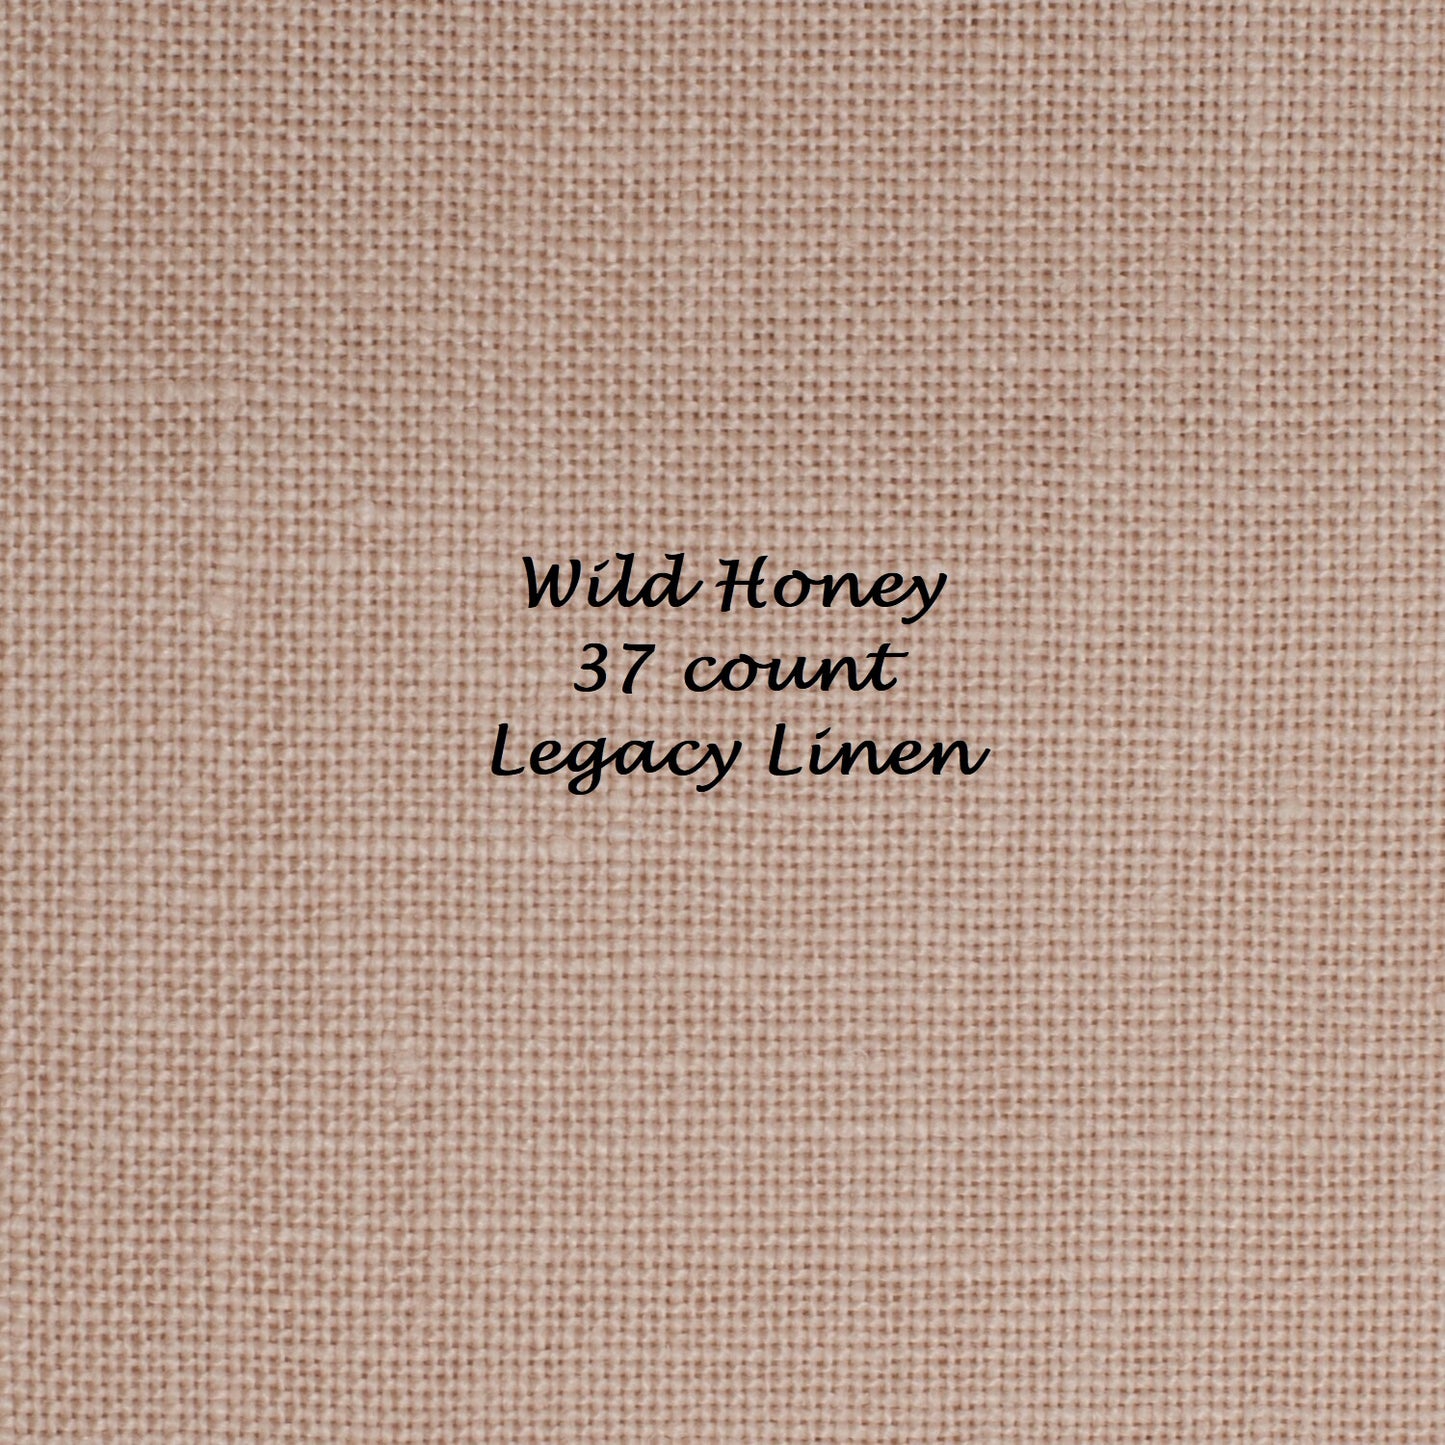 37 count Legacy Linen - Wild Honey